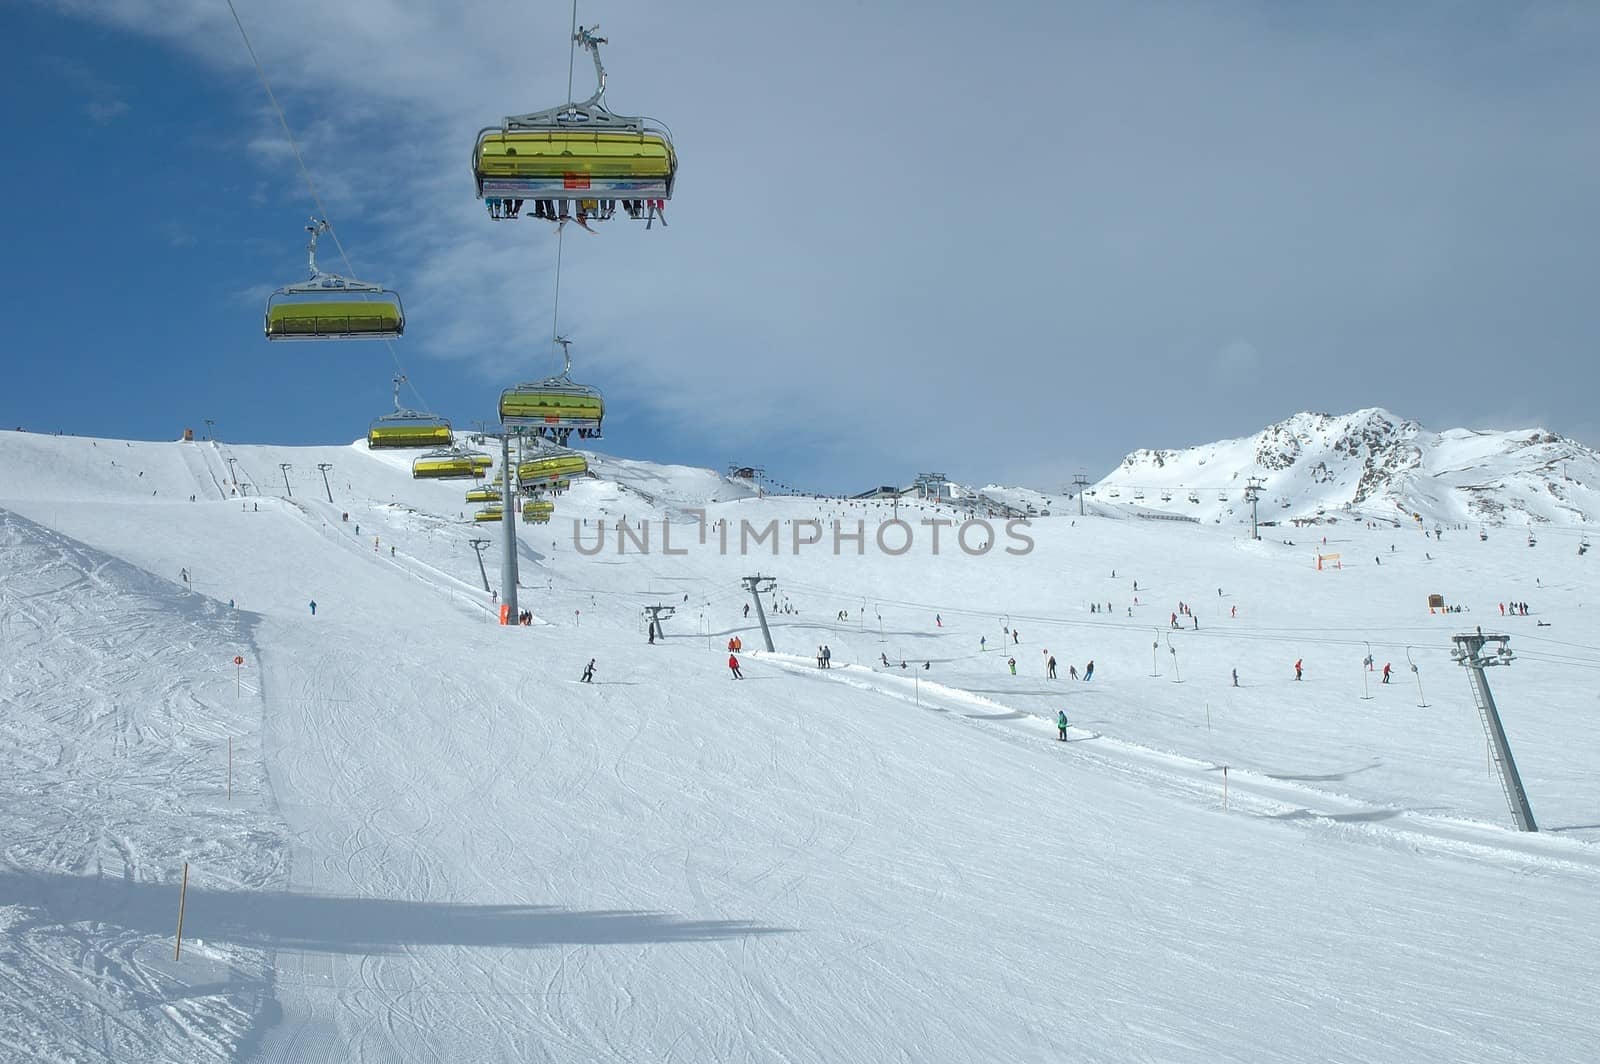 Ski lift by janhetman